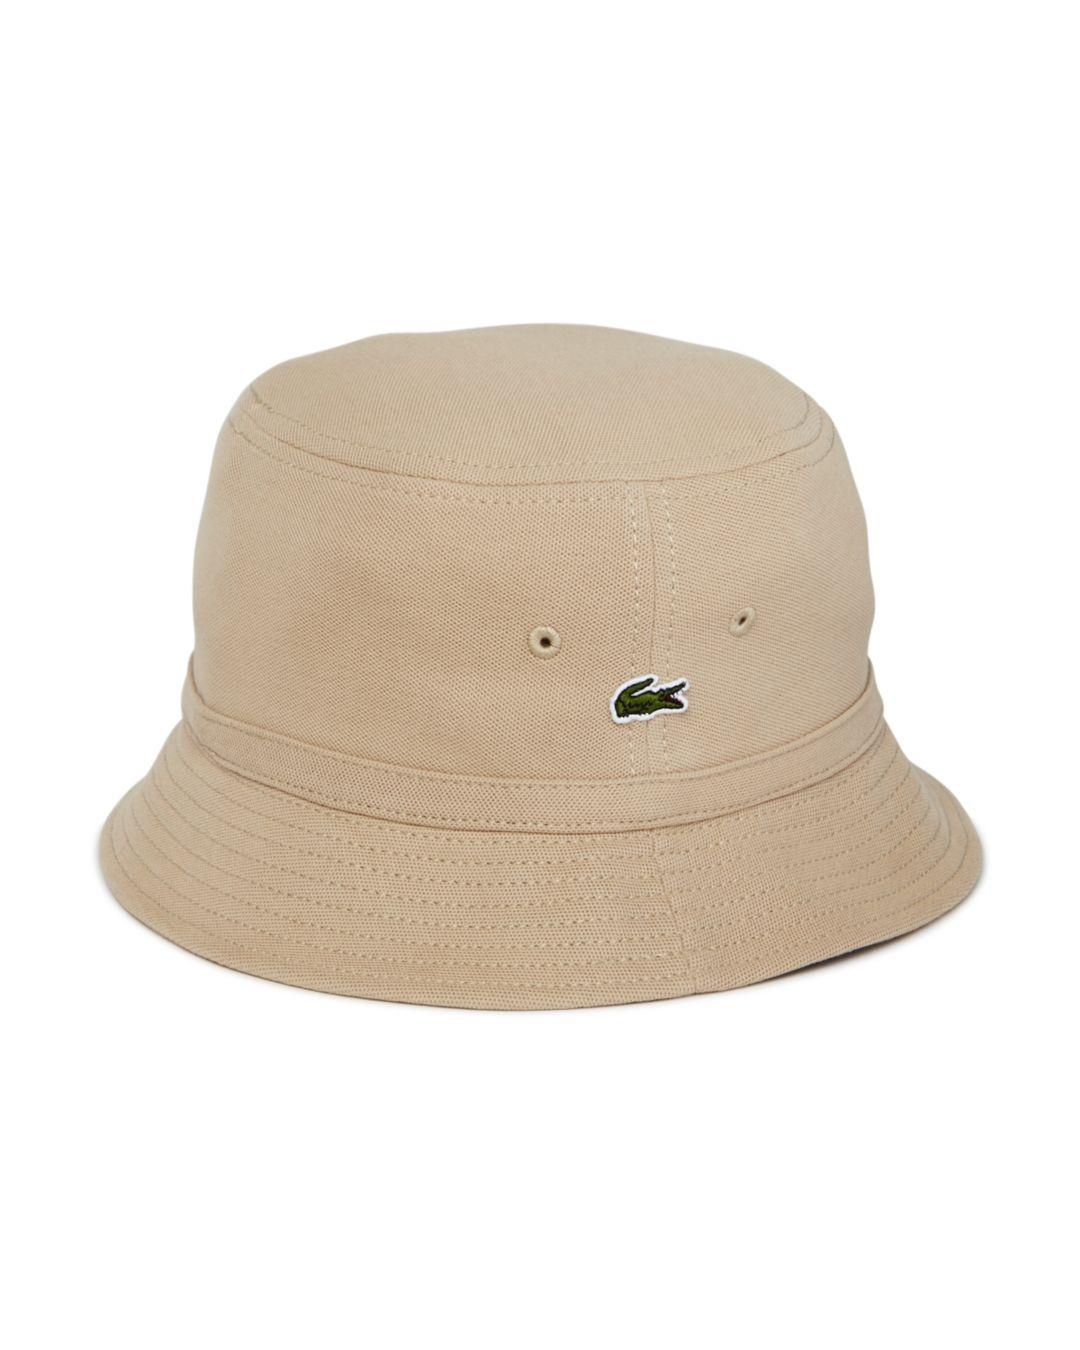 lacoste bucket hat white